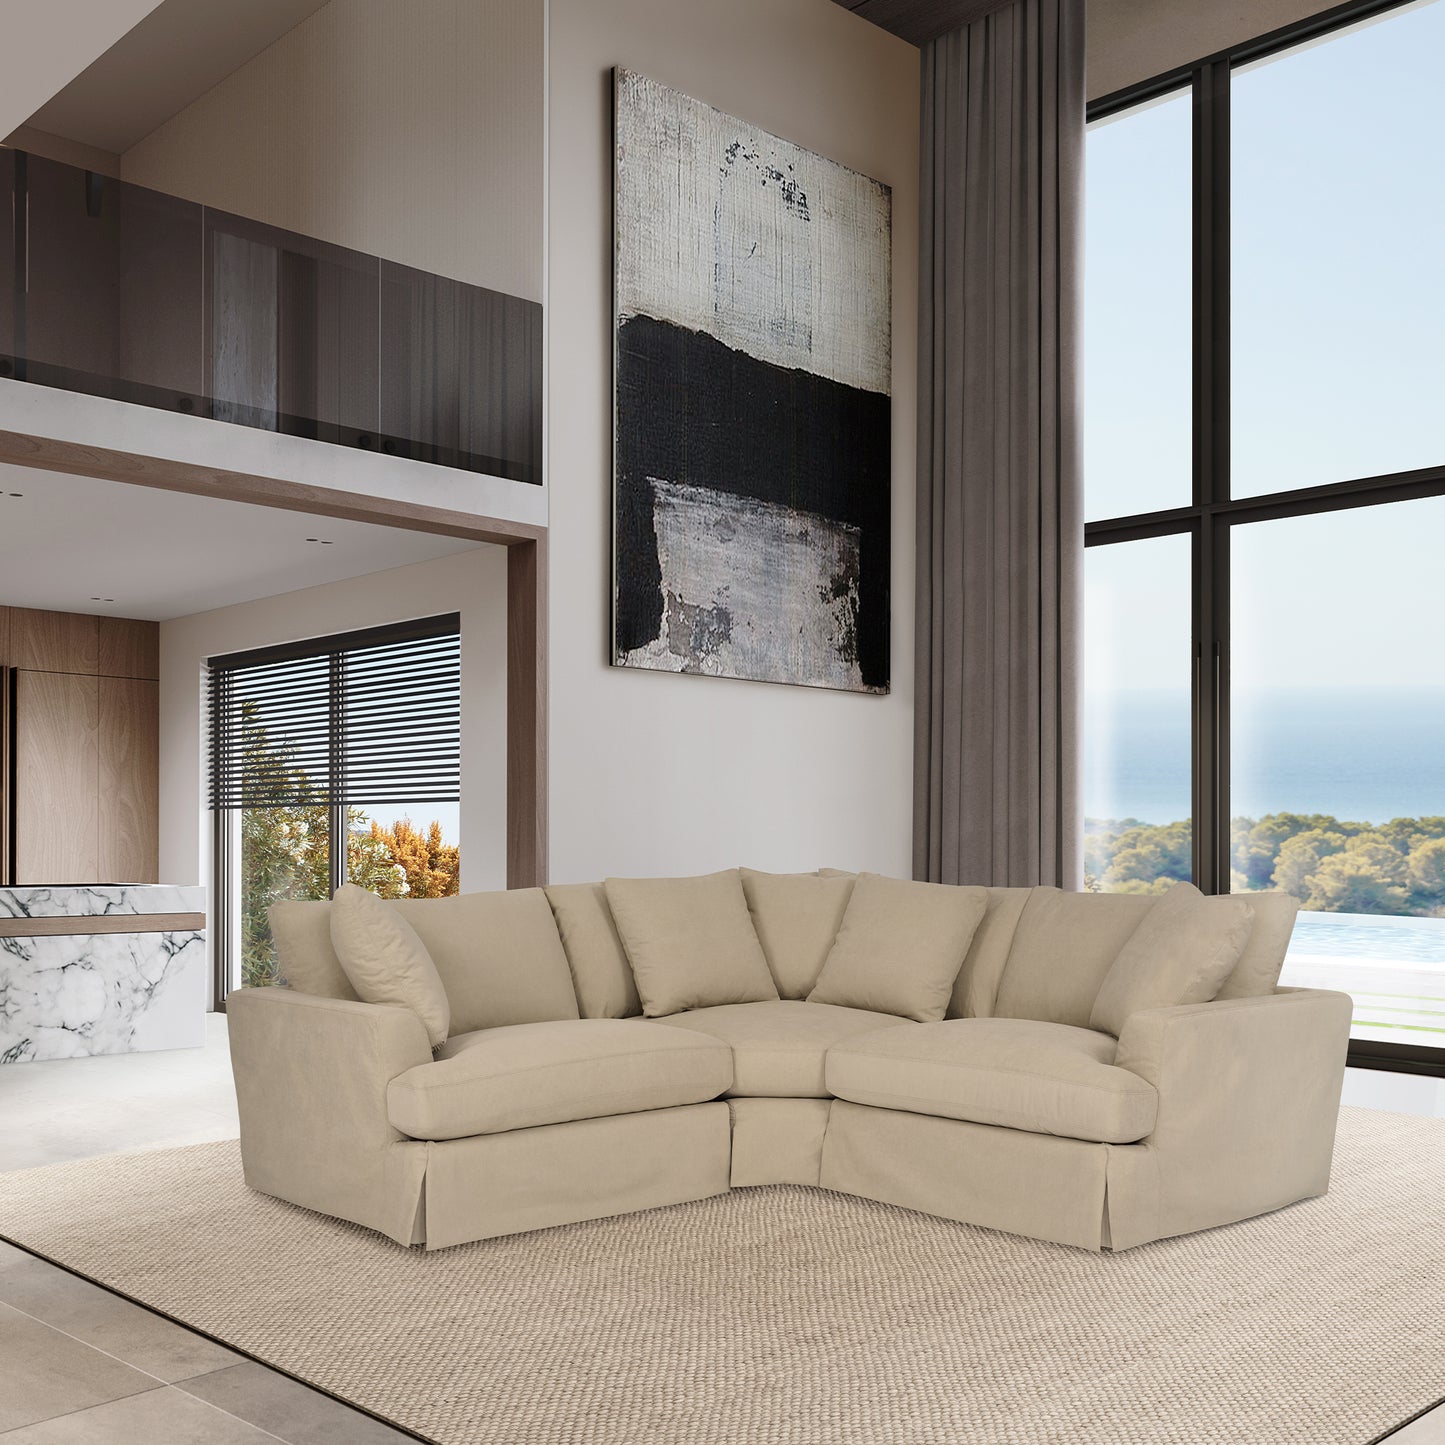 Ciara Upholstered 3 Piece Sectional Sofa in Sahara Brown